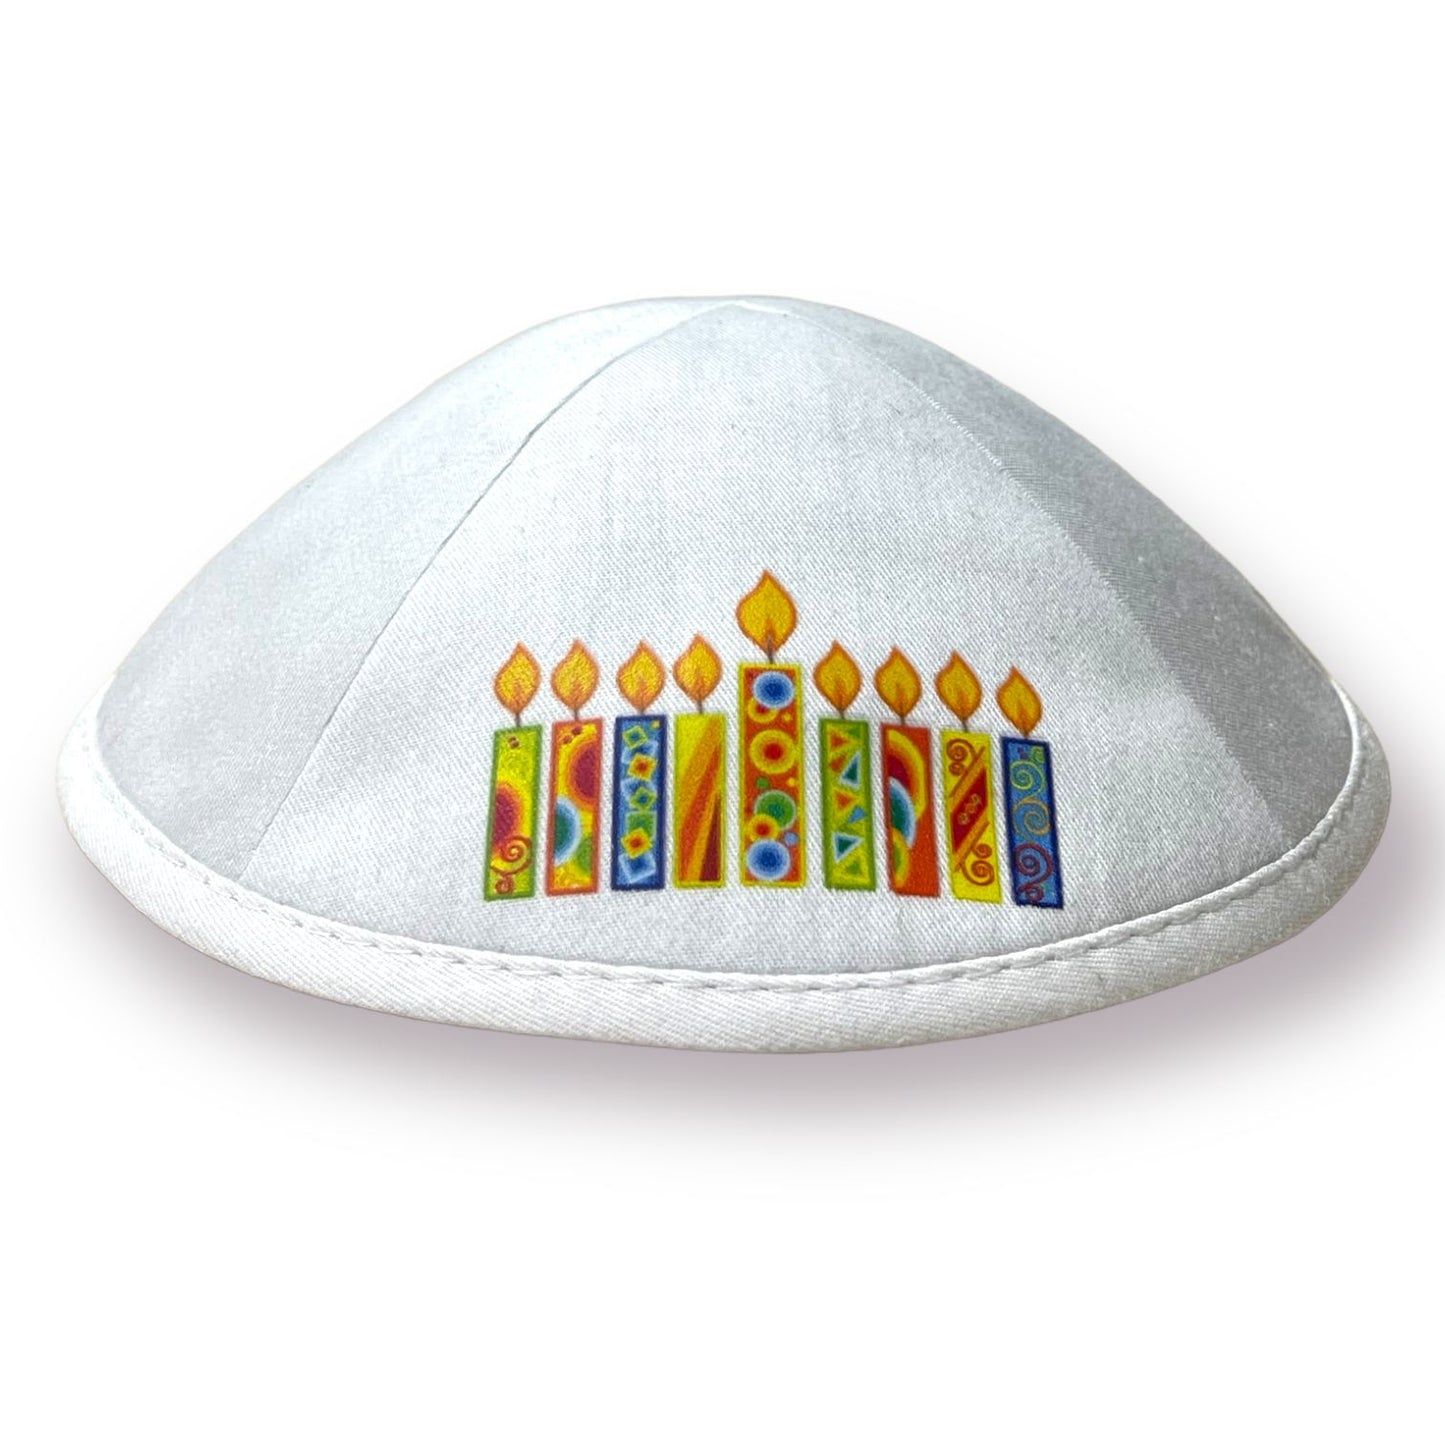 Hanukkah colorful candles printed on a linen kippah